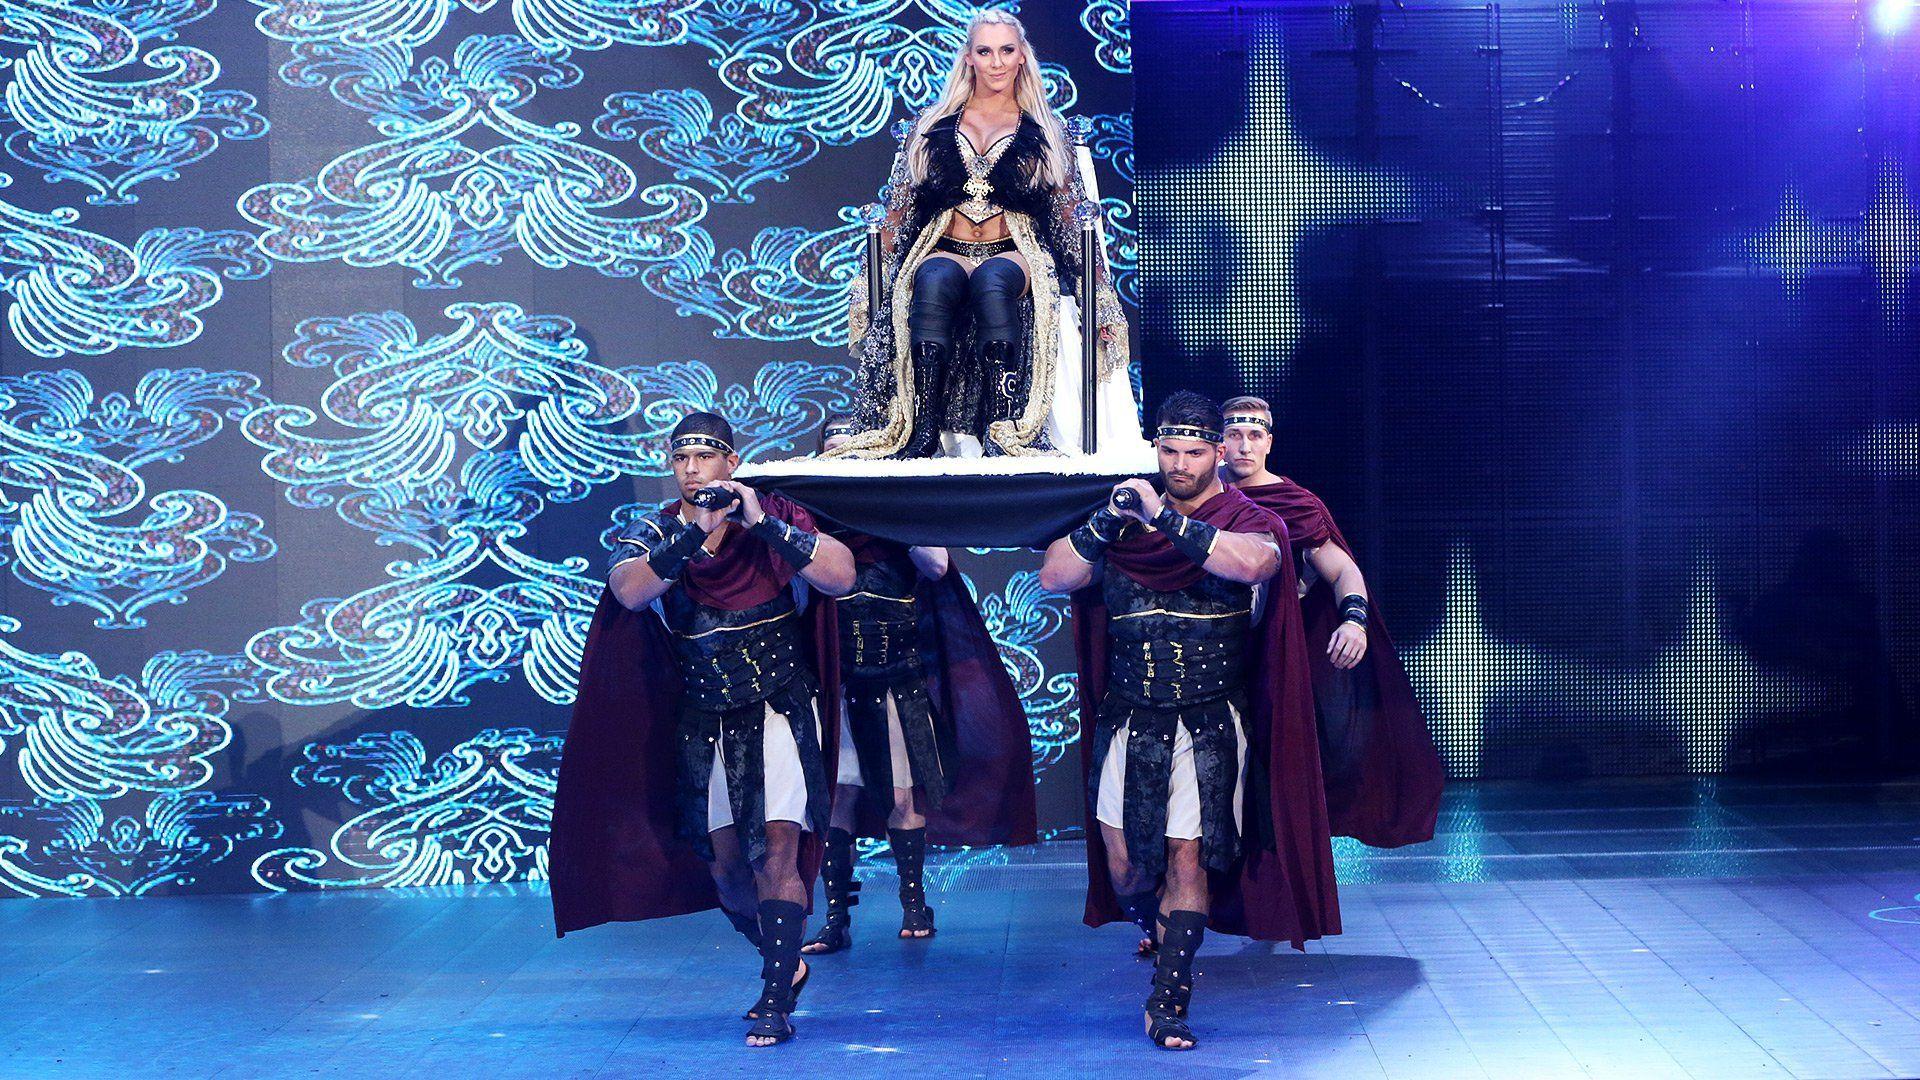 Charlotte Flair def. Sasha Banks to win the Raw Women's